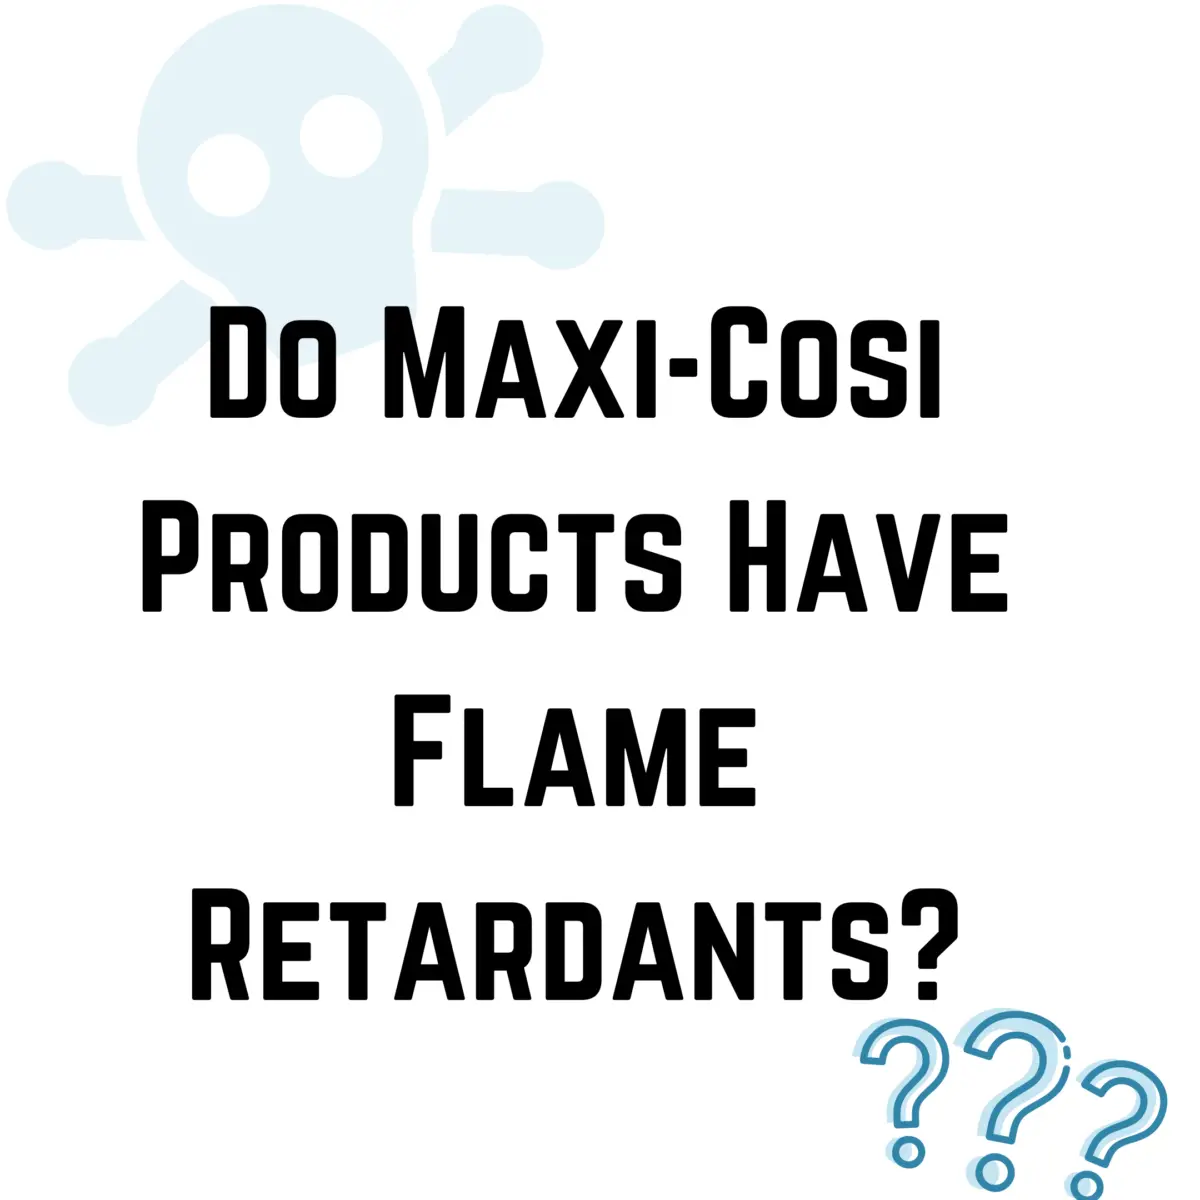 Do Maxo-Cosi Use Flame Retardants?